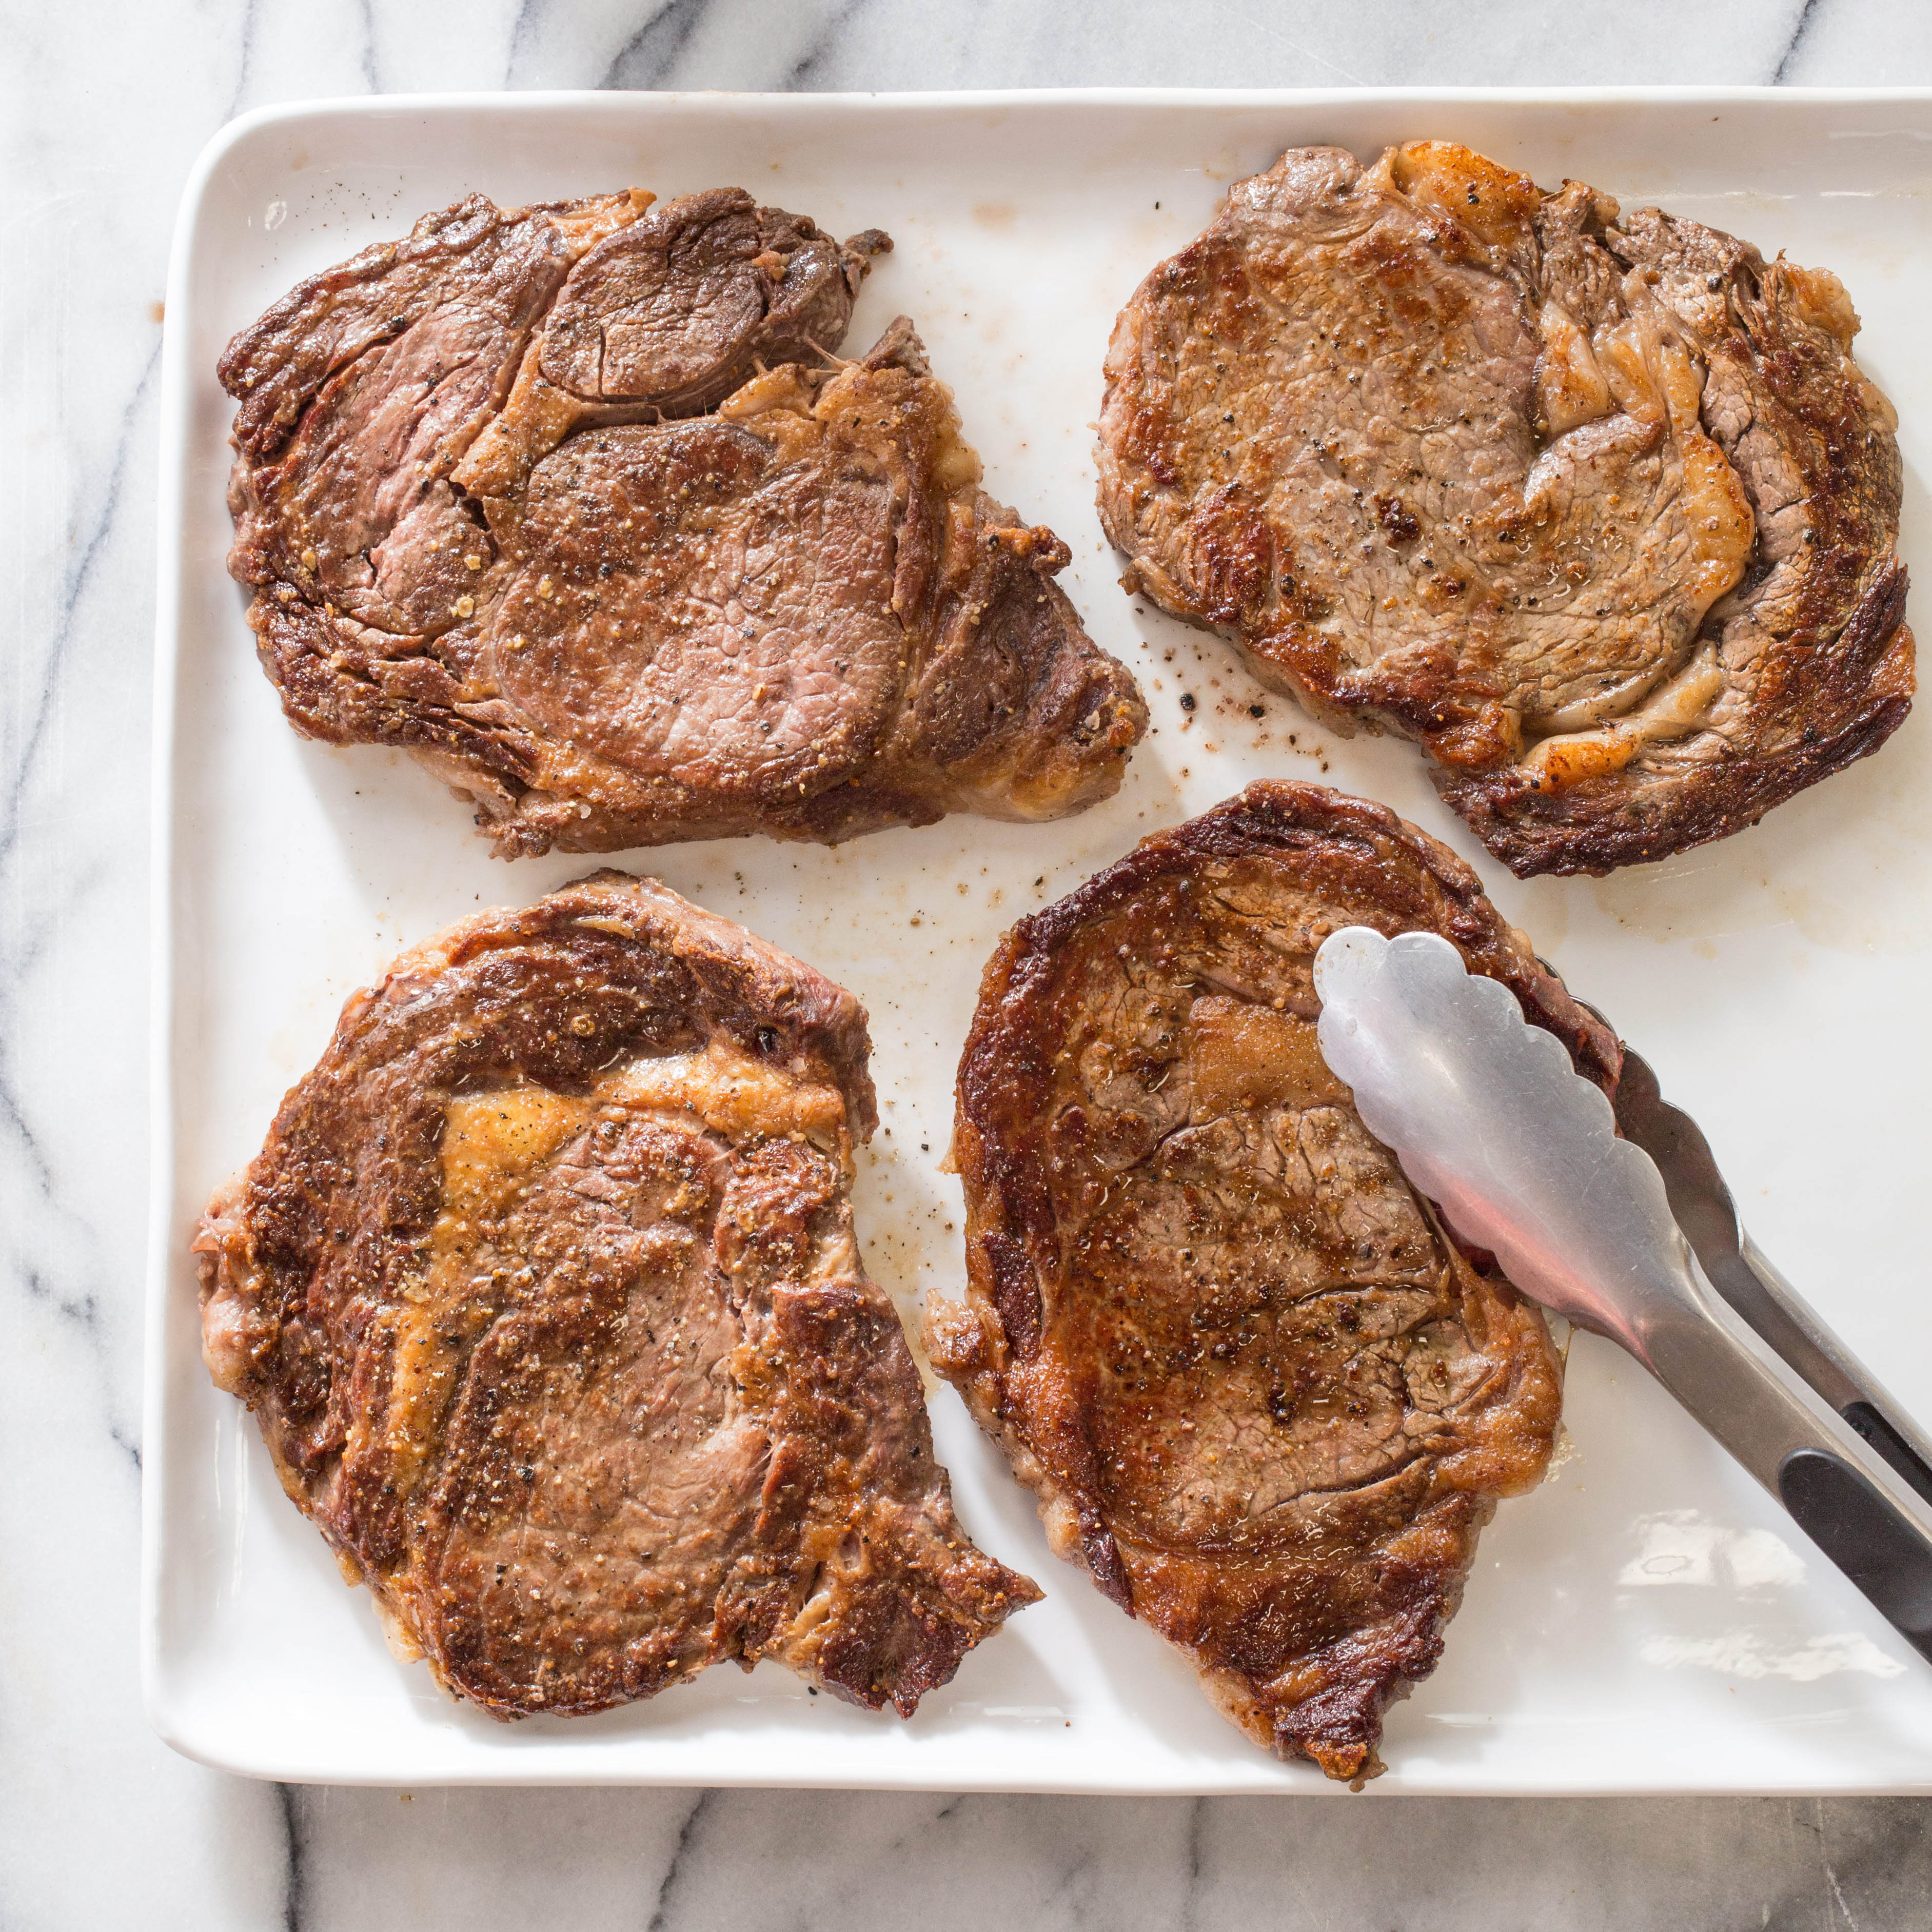 Pan Seared Steak - The Carefree Kitchen